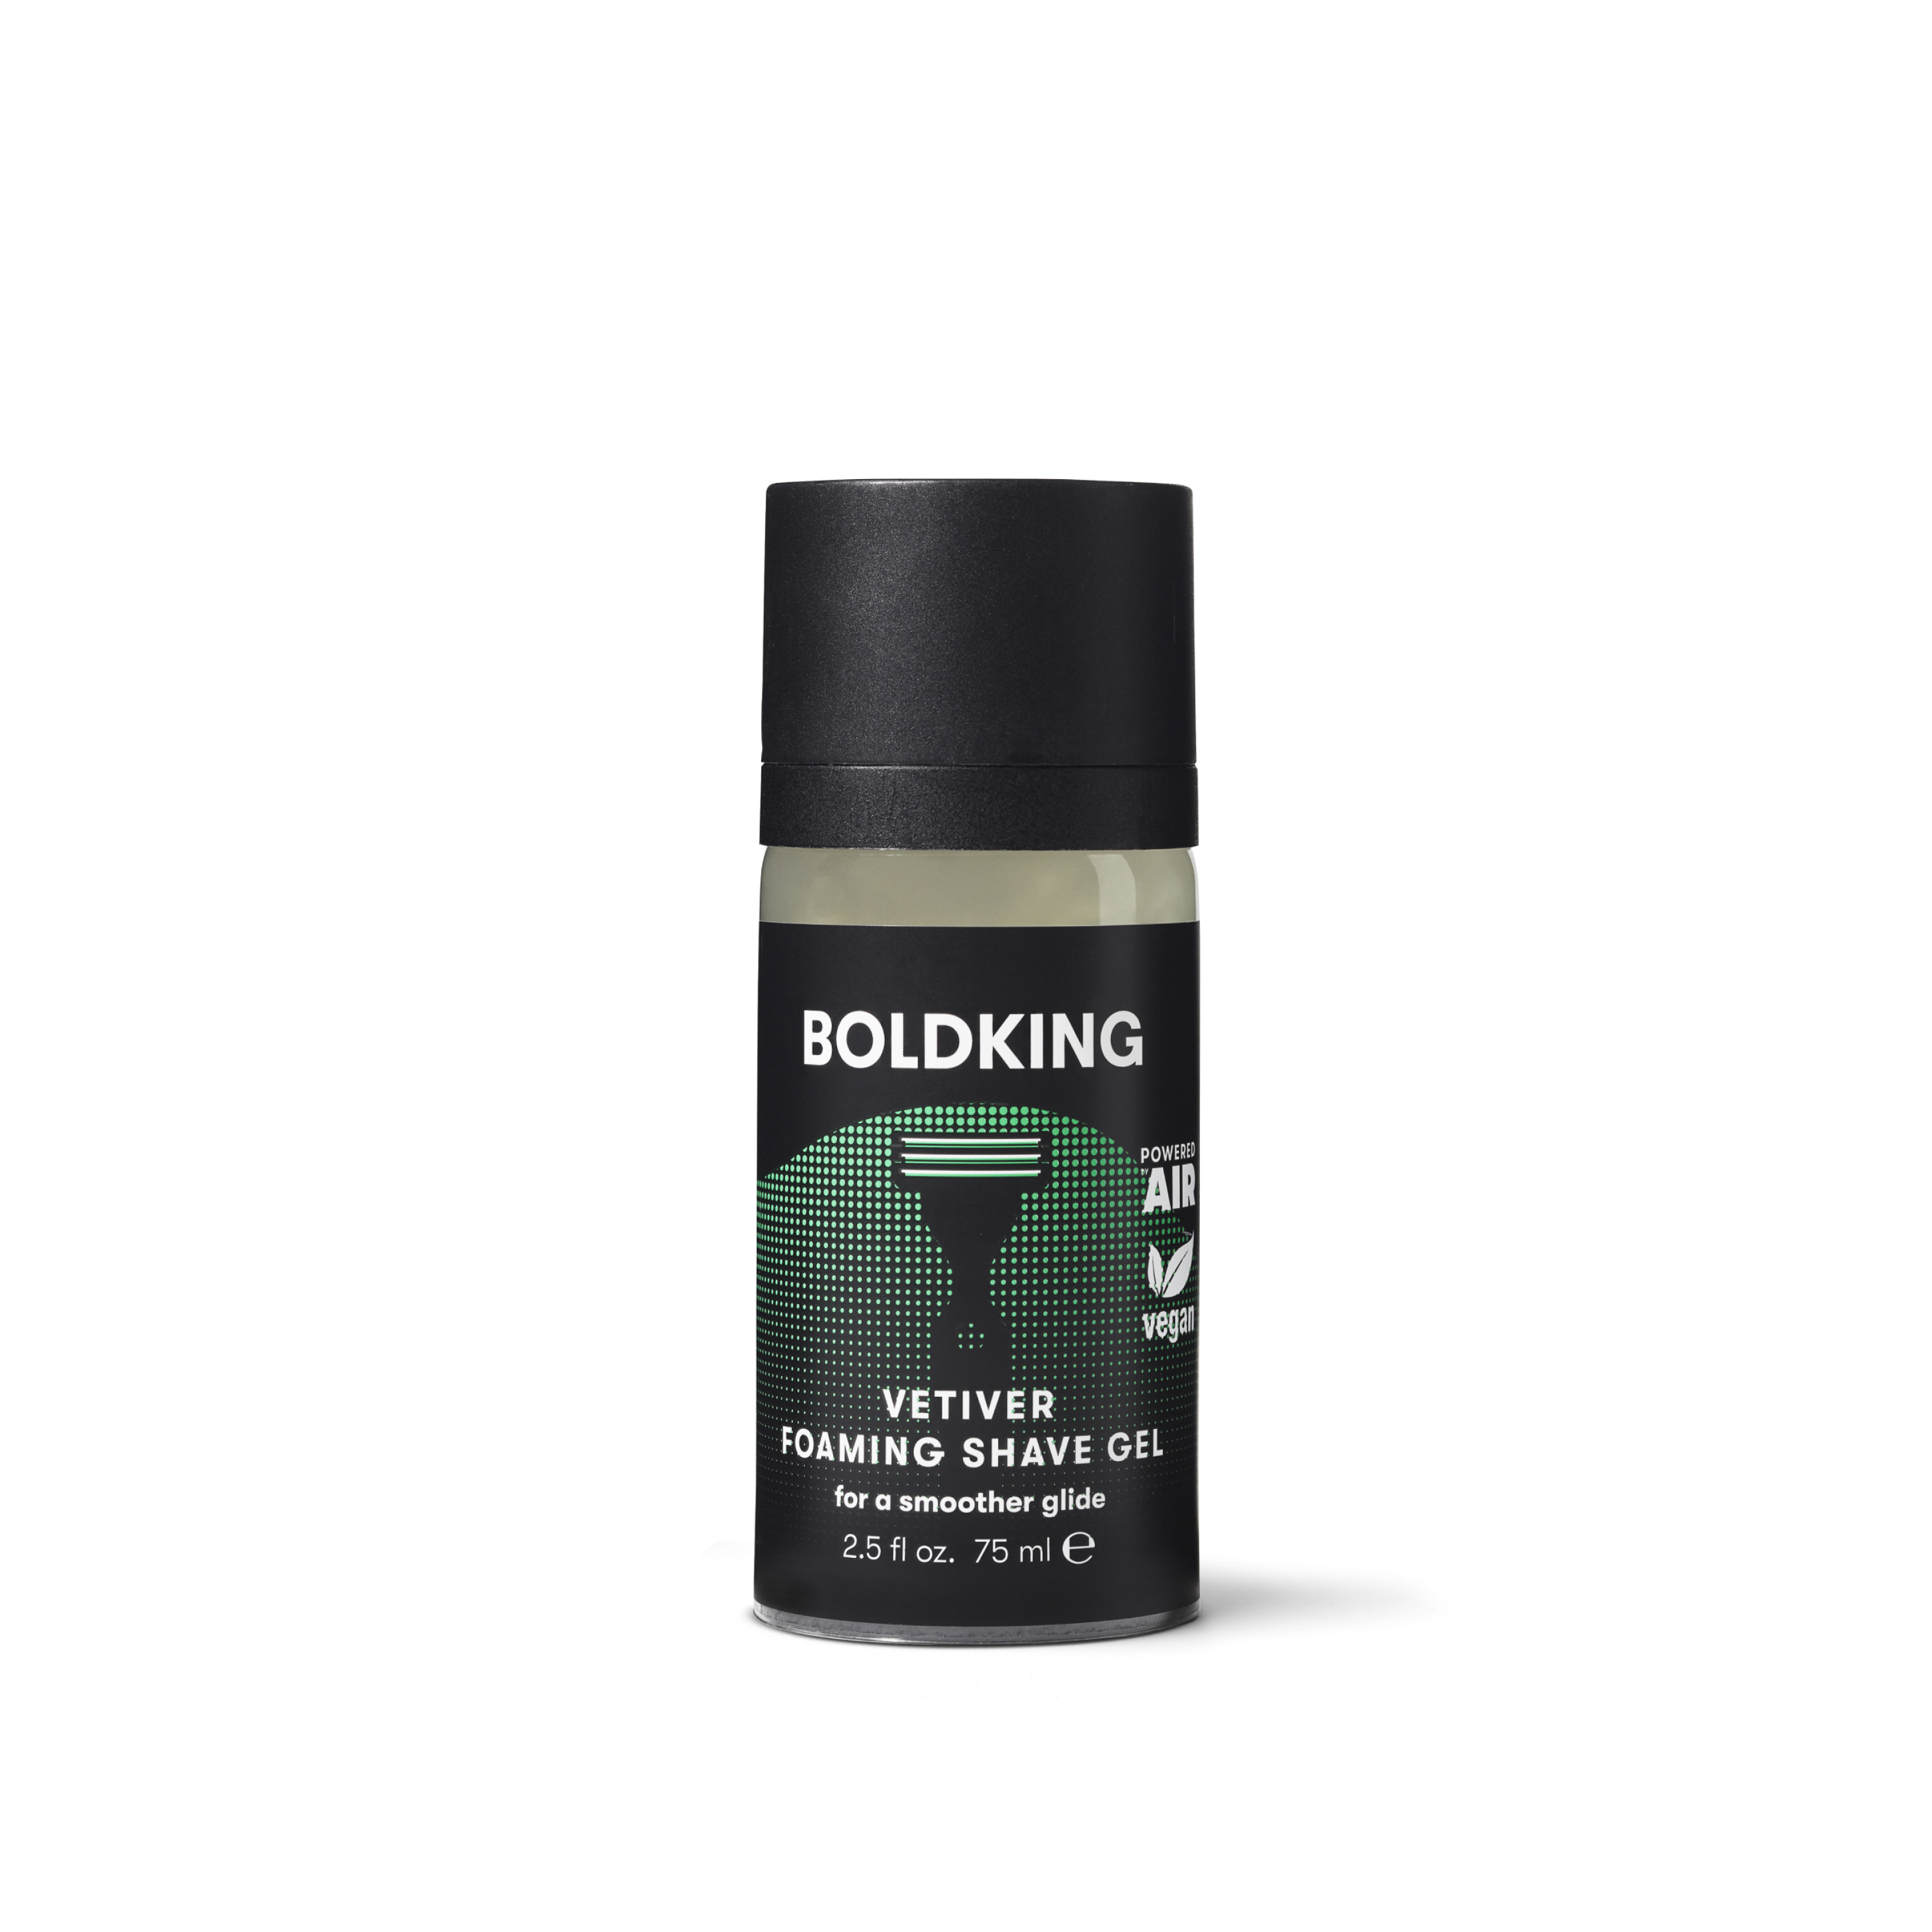 Boldking Foaming Shave Gel 75ml Vetiver